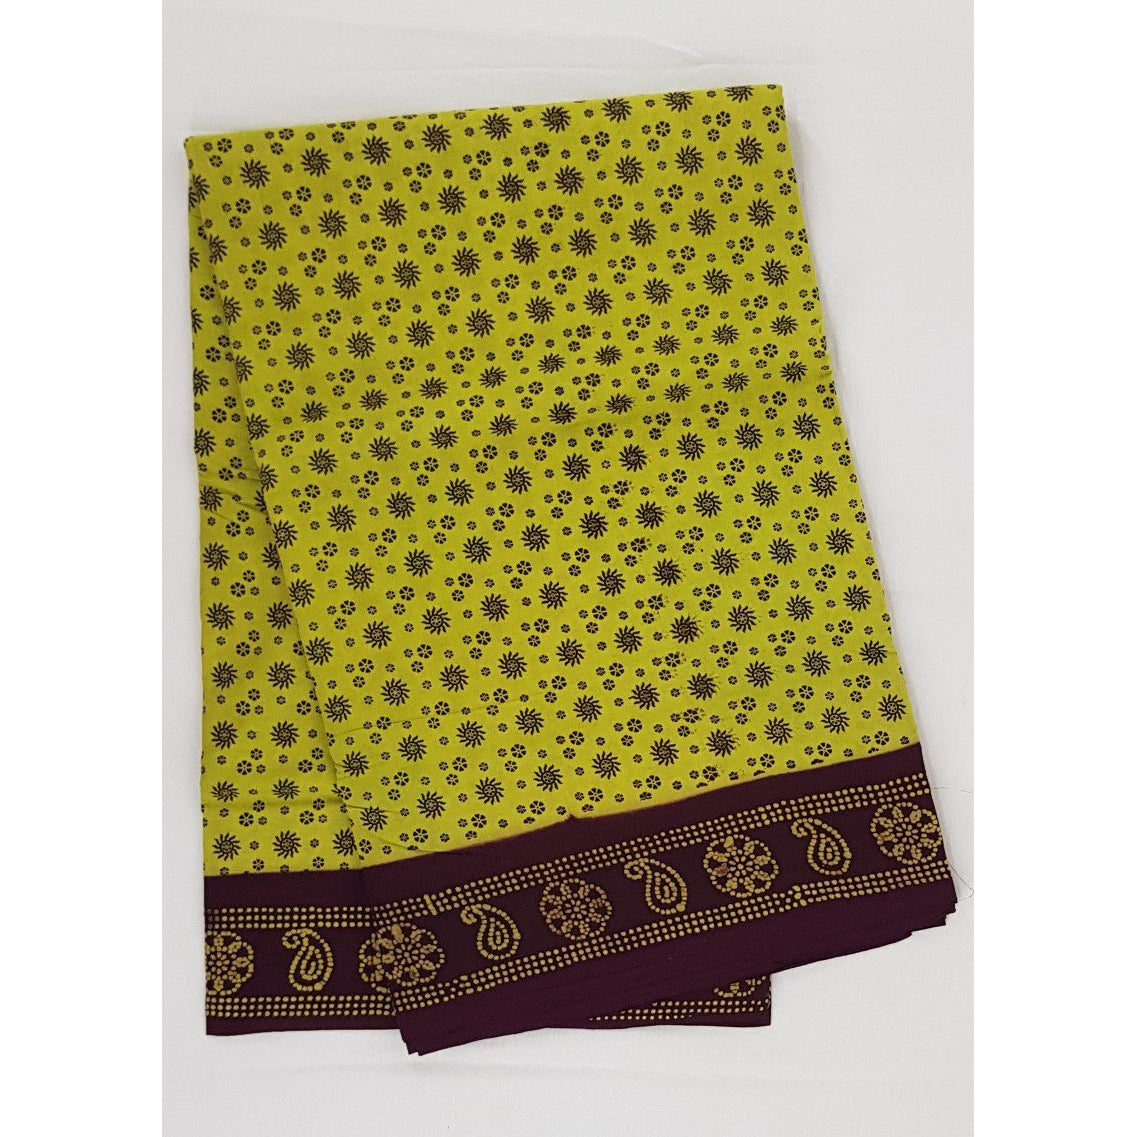 Madhurai Sungudi 9 Yards printed pure cotton saree - Vinshika